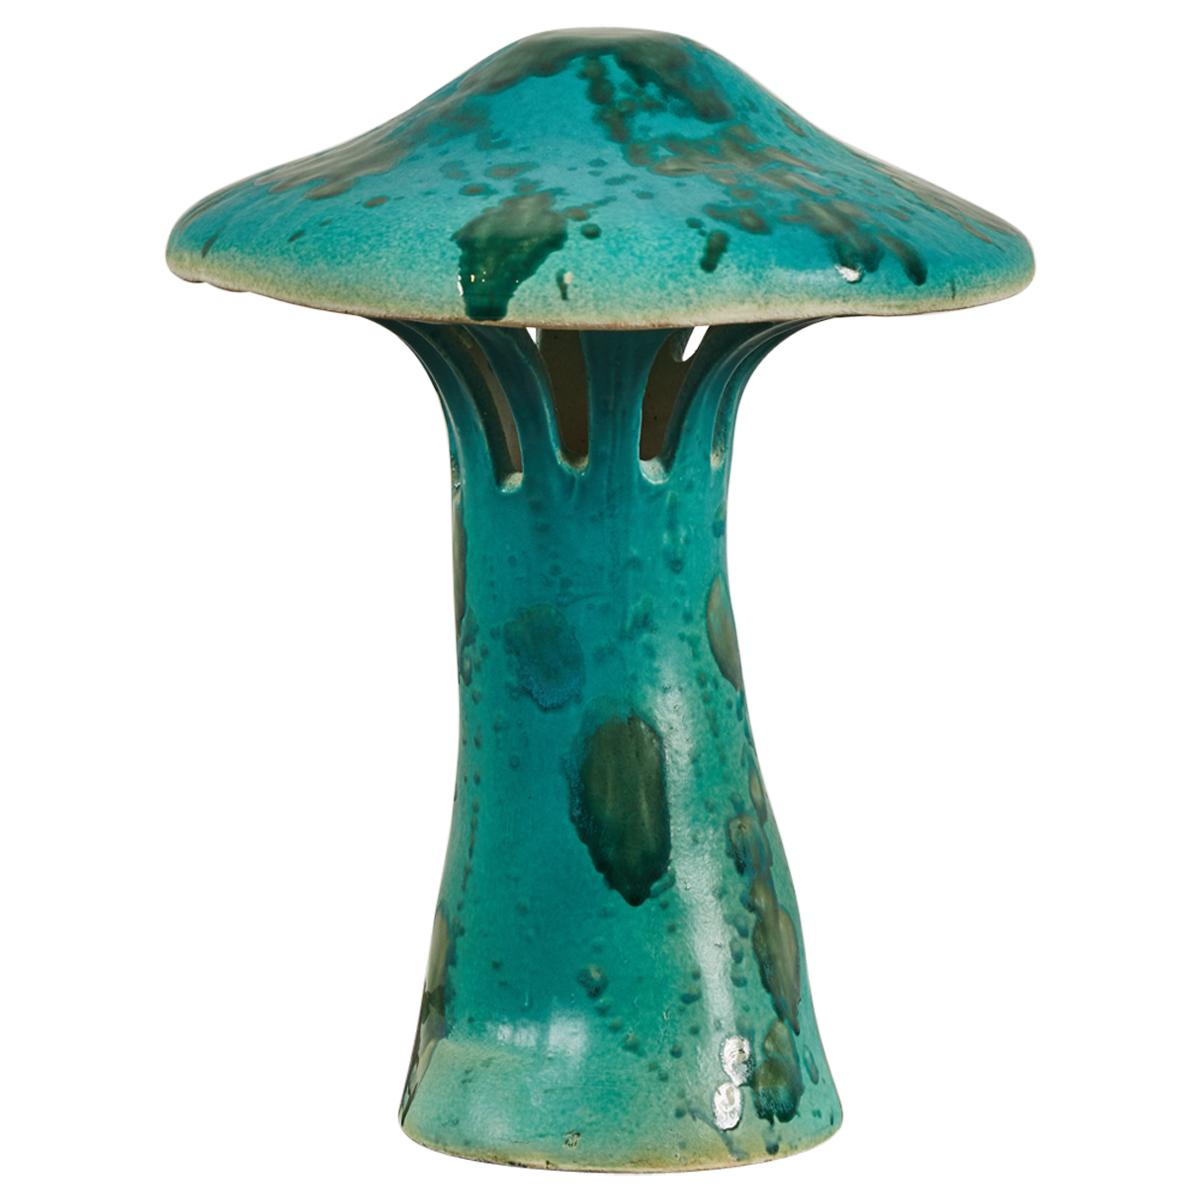 Ceramic Mushroom Table Lamp by Atelier MVM